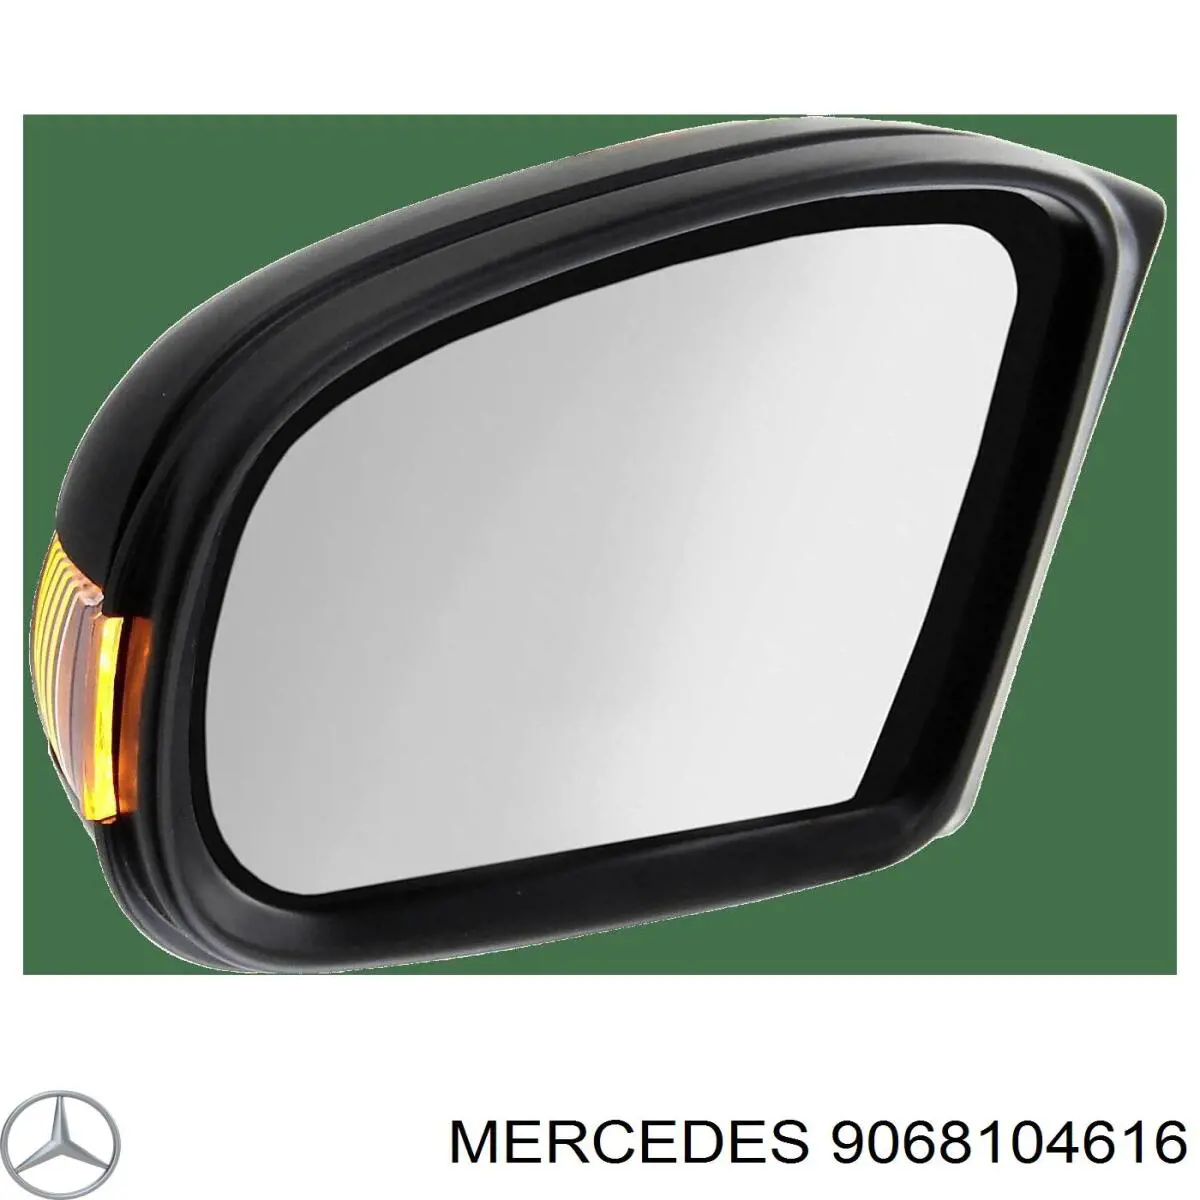 9068104616 Mercedes espejo retrovisor derecho